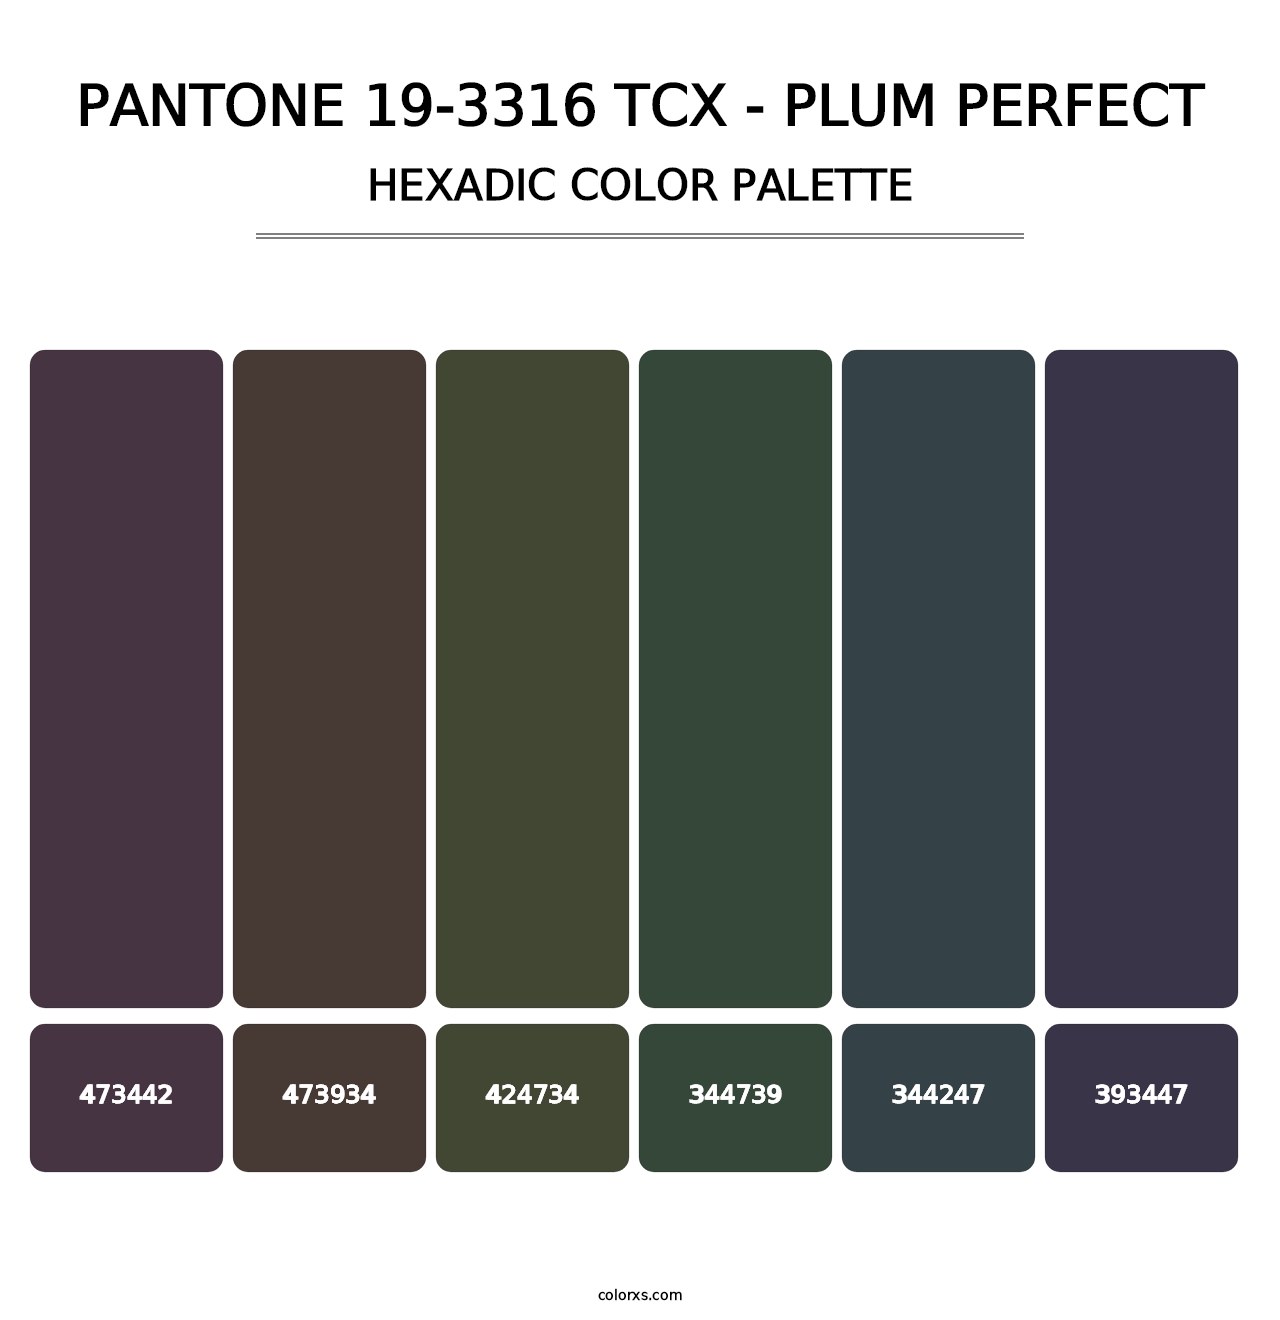 PANTONE 19-3316 TCX - Plum Perfect - Hexadic Color Palette